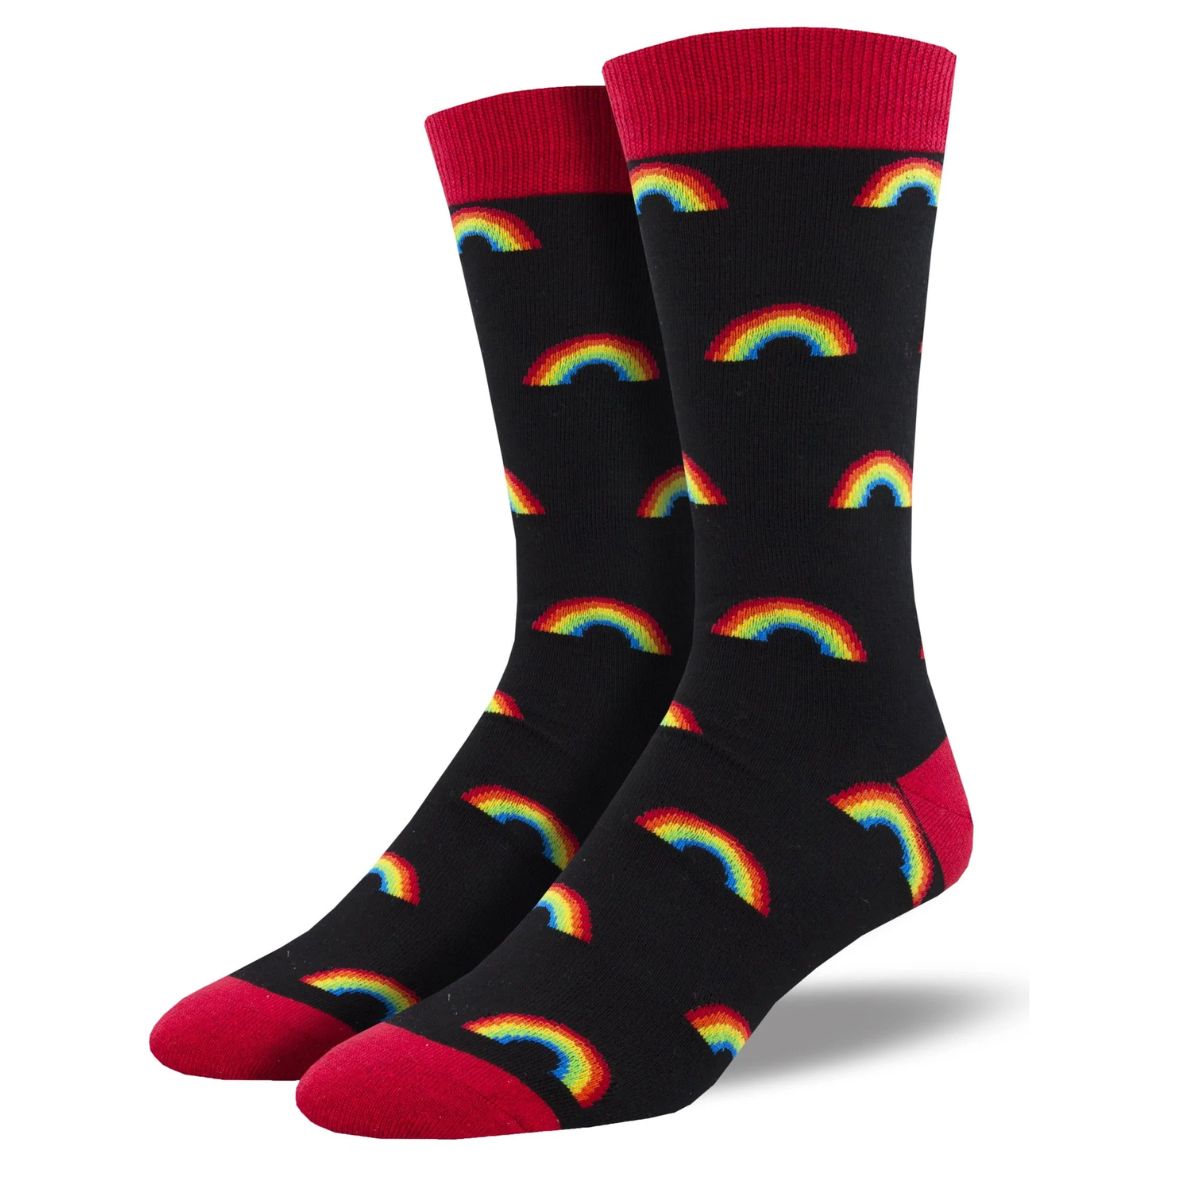 On the bright side socks a pair of black crew socks with rainbow print